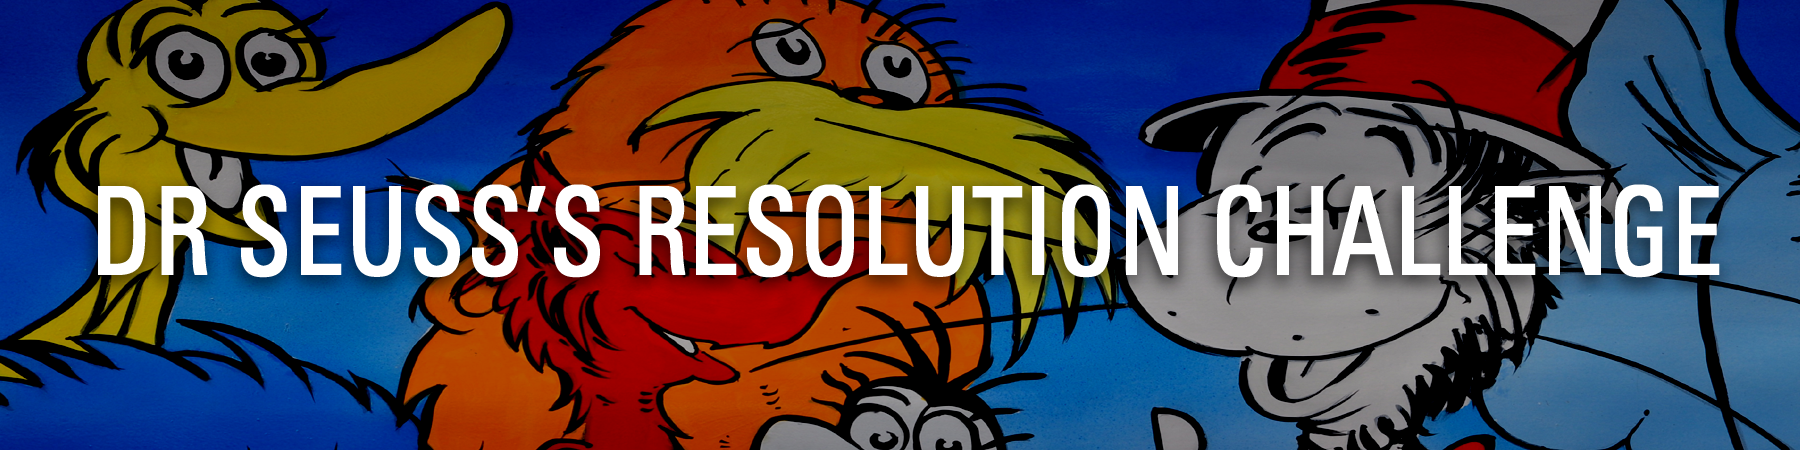 Dr Seuss’s Resolution Challenge